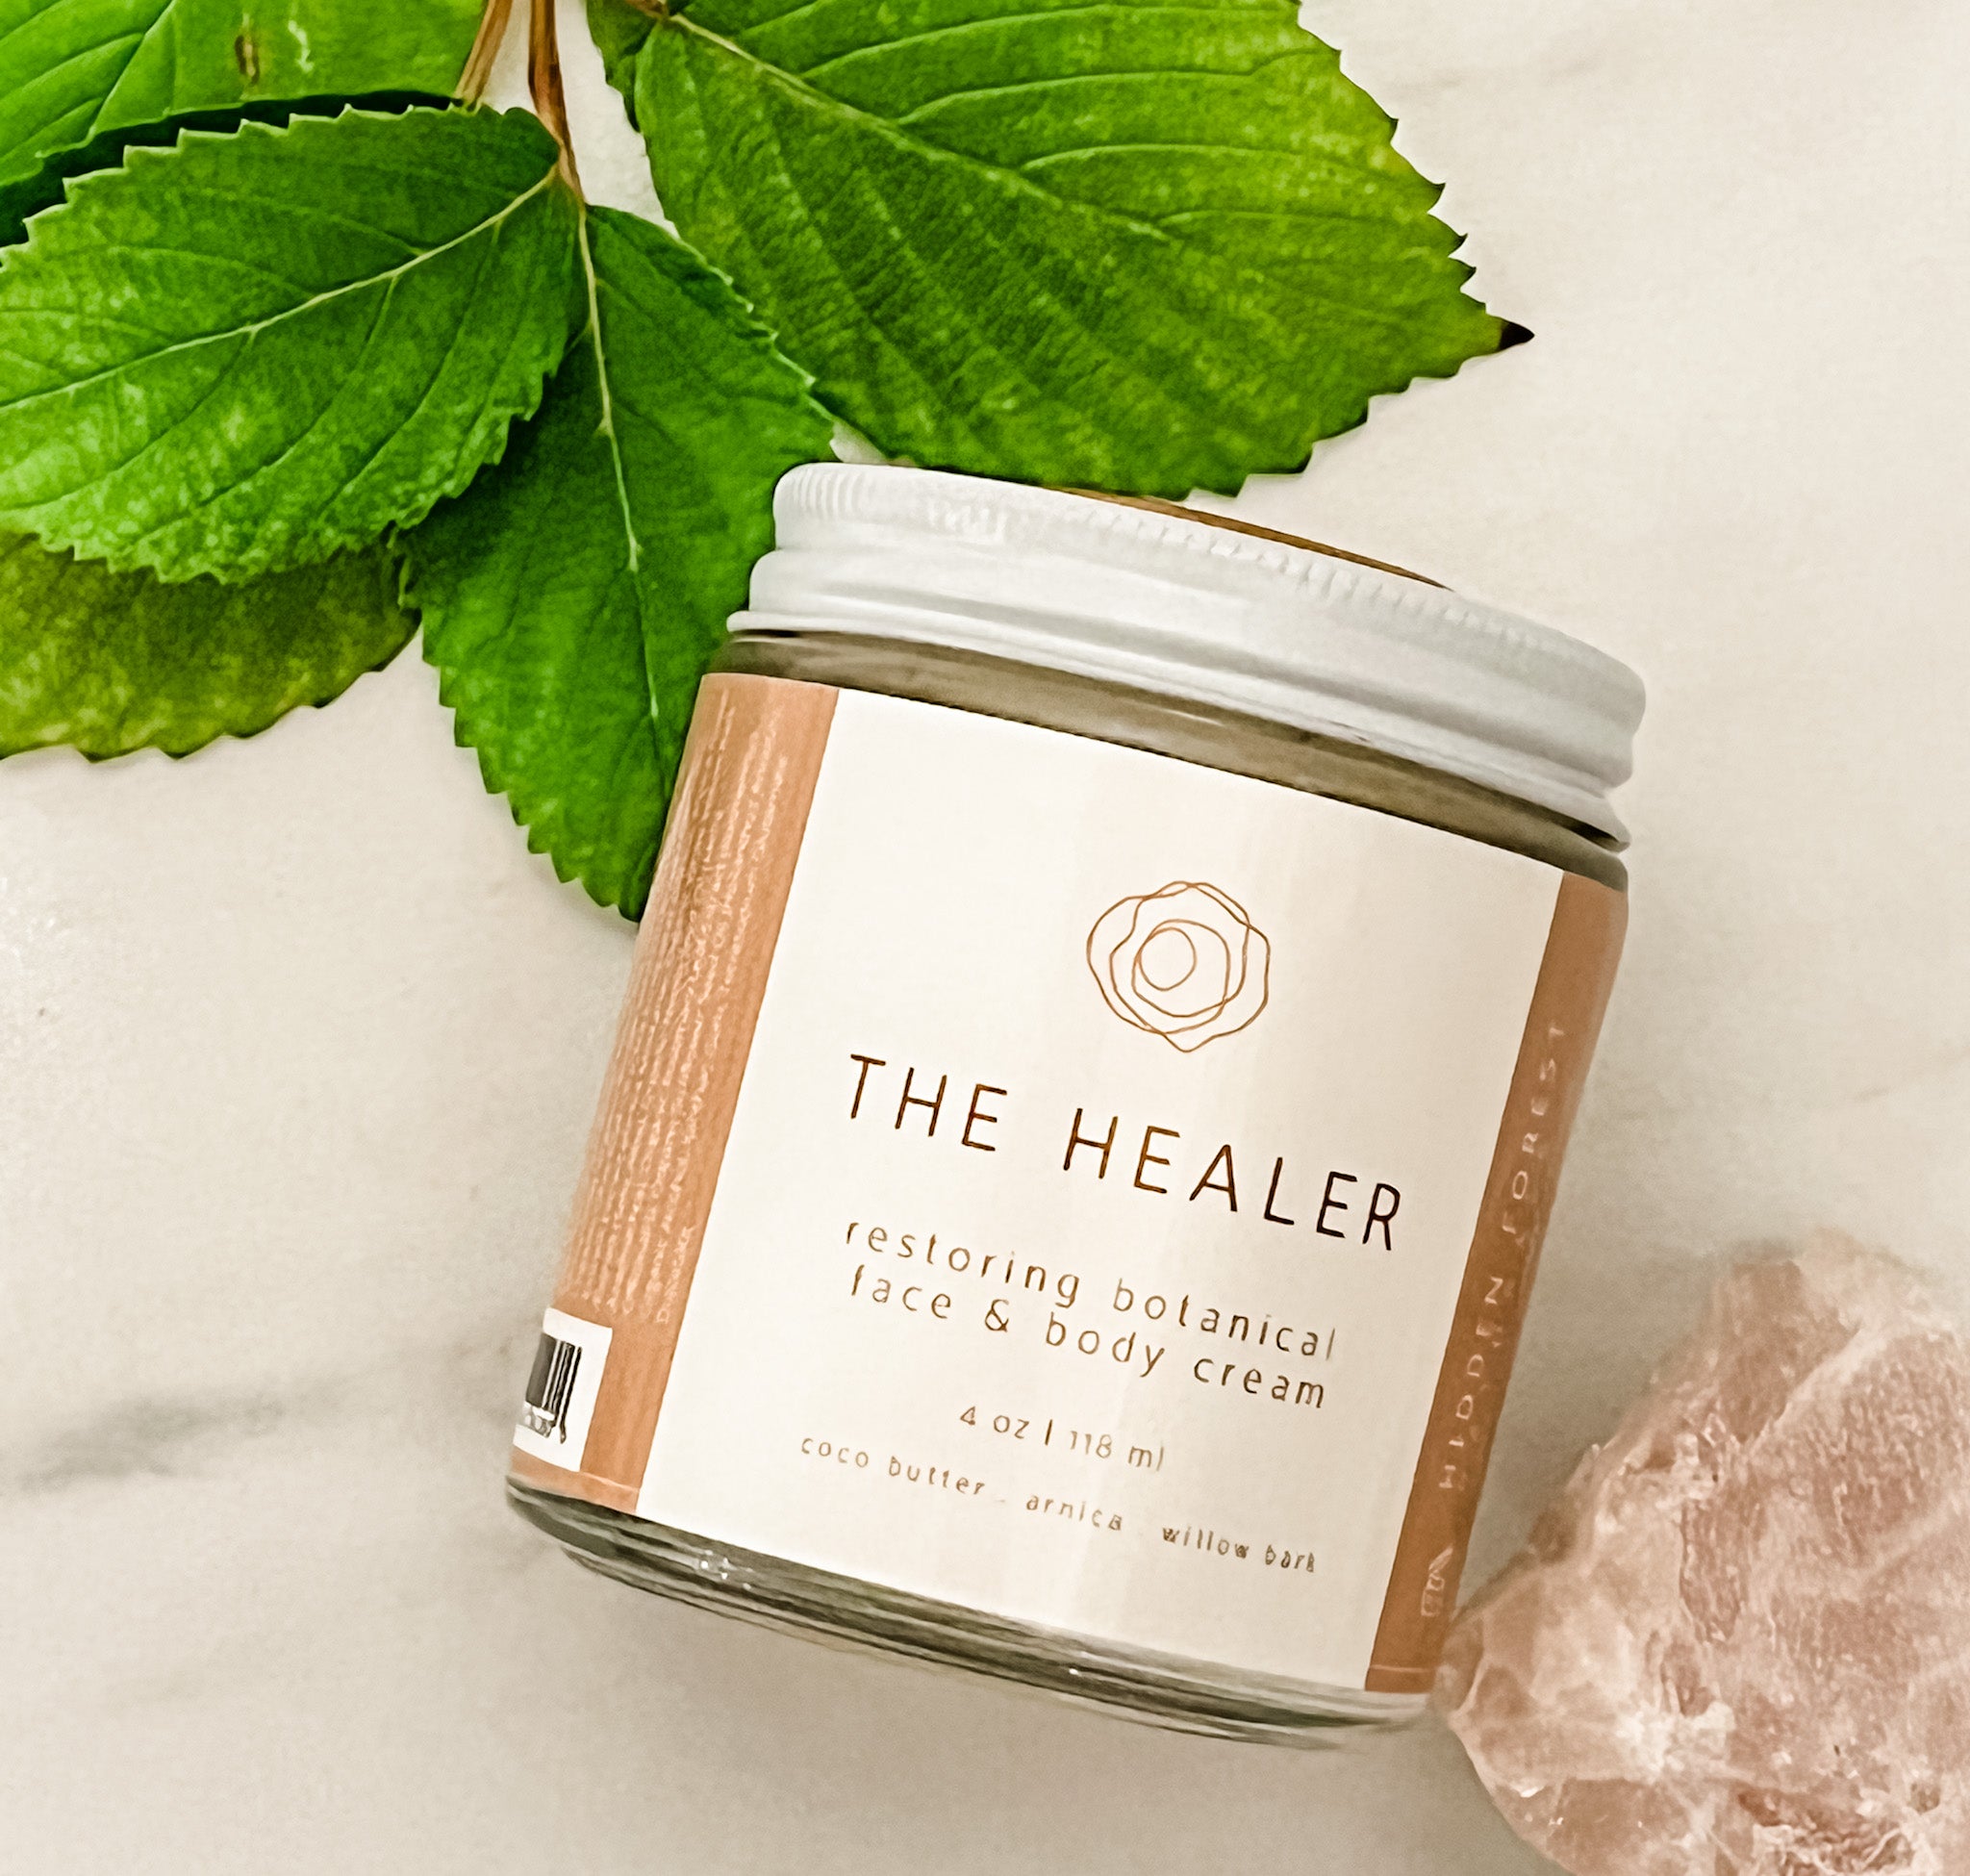 The Healer - Restoring Botanical face & body cream - Handmade with Natural Ingredients. Hidden Forest Naturals